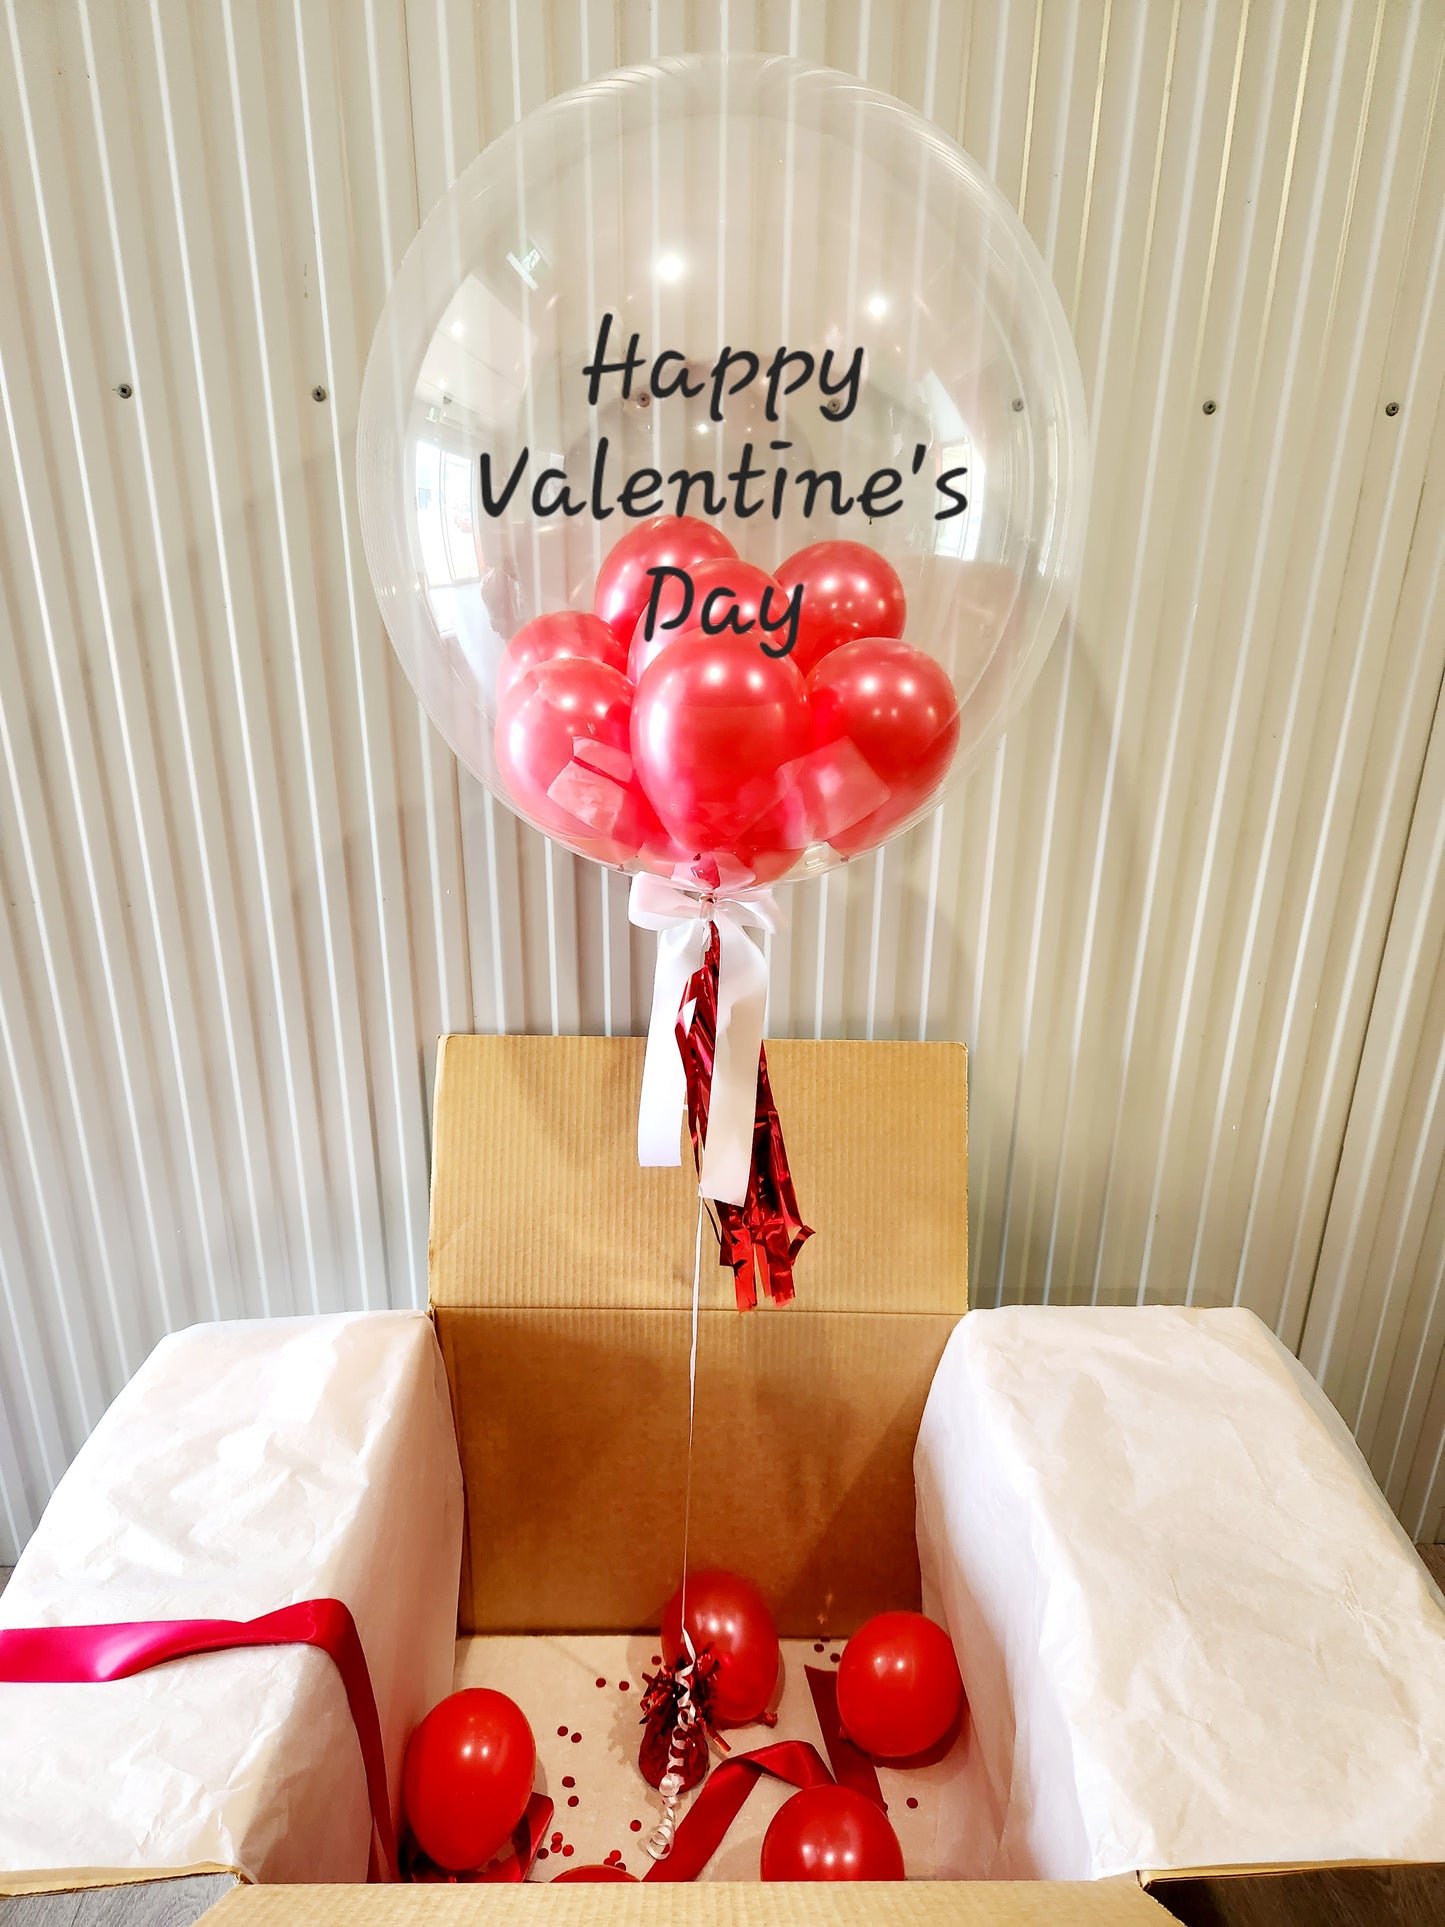 Balloon in a Box Gift - Valentine's